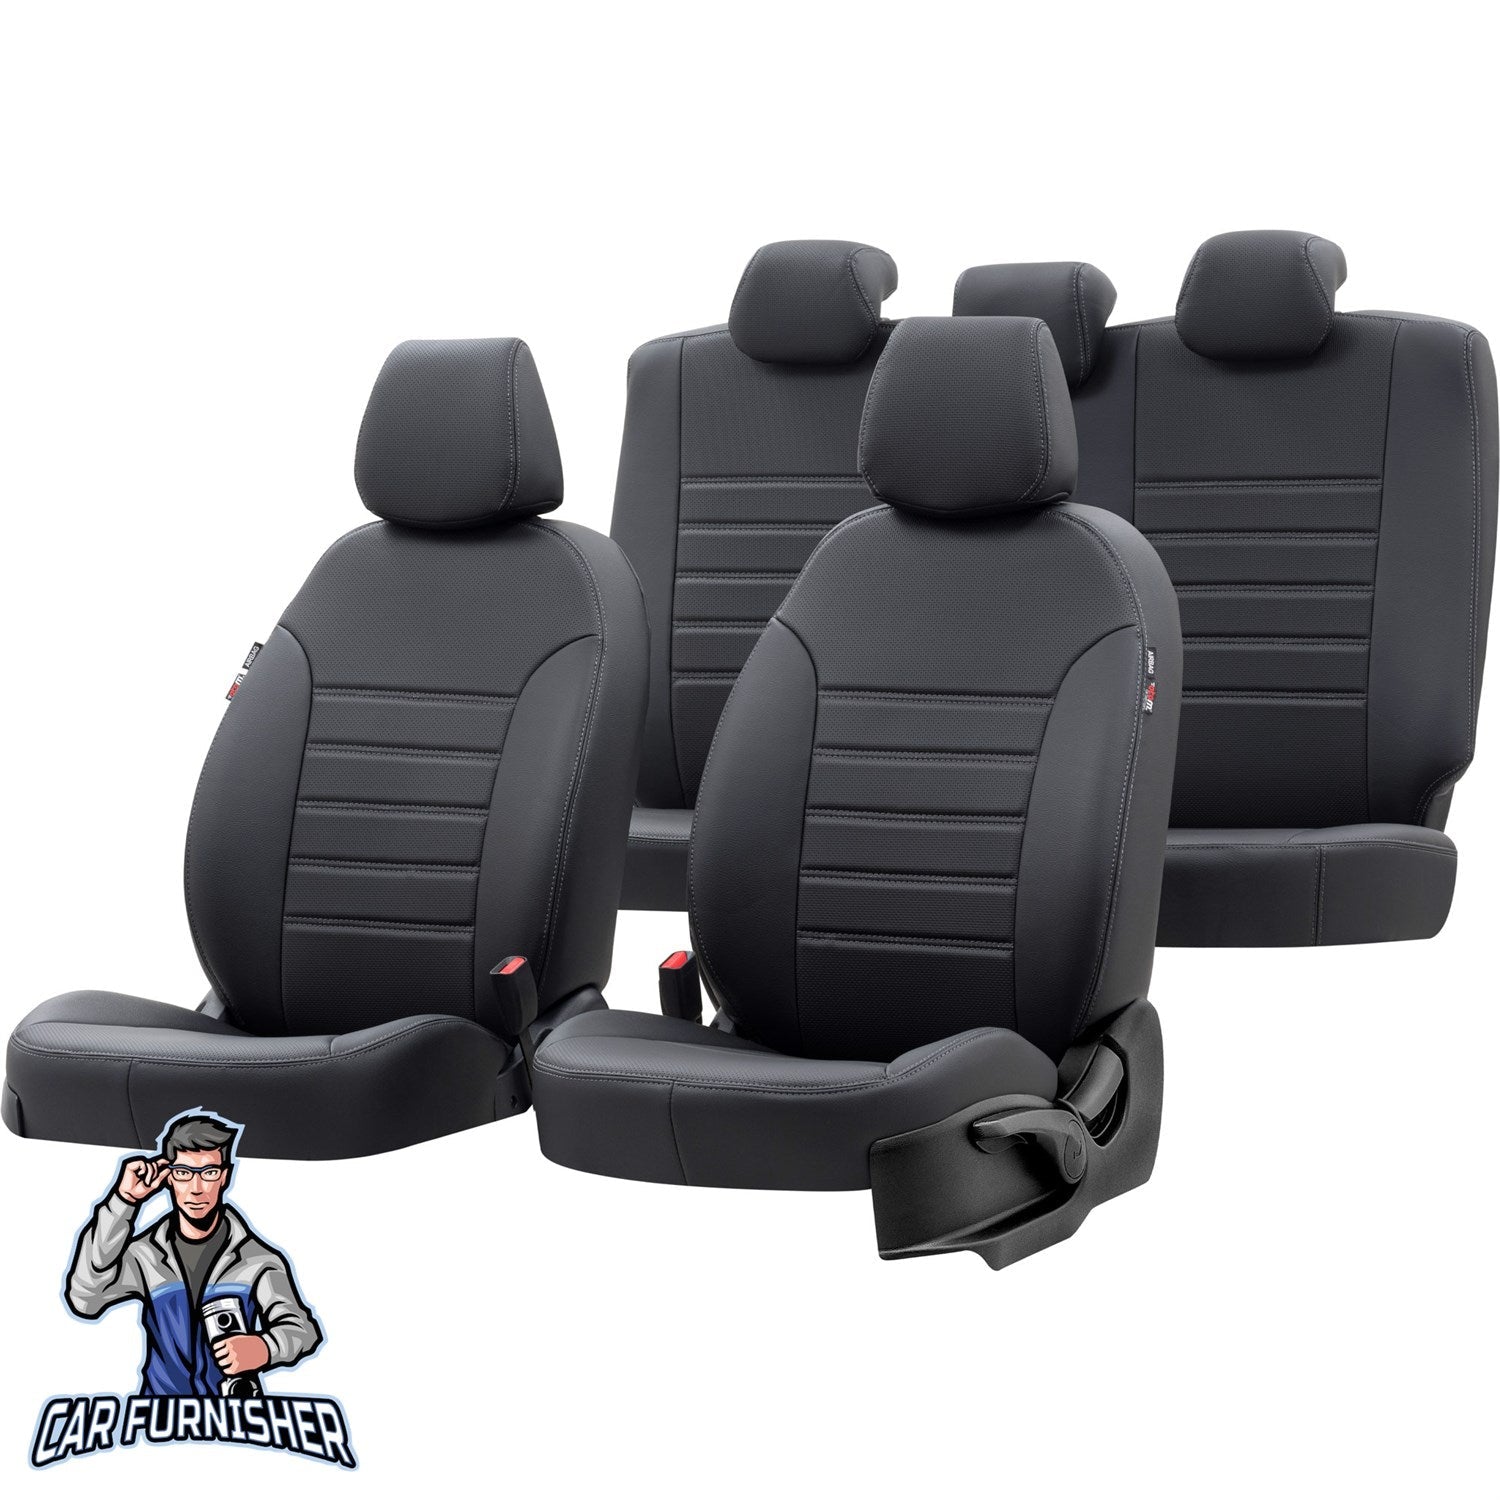 Volkswagen Jetta Seat Cover New York Leather Design Black Leather